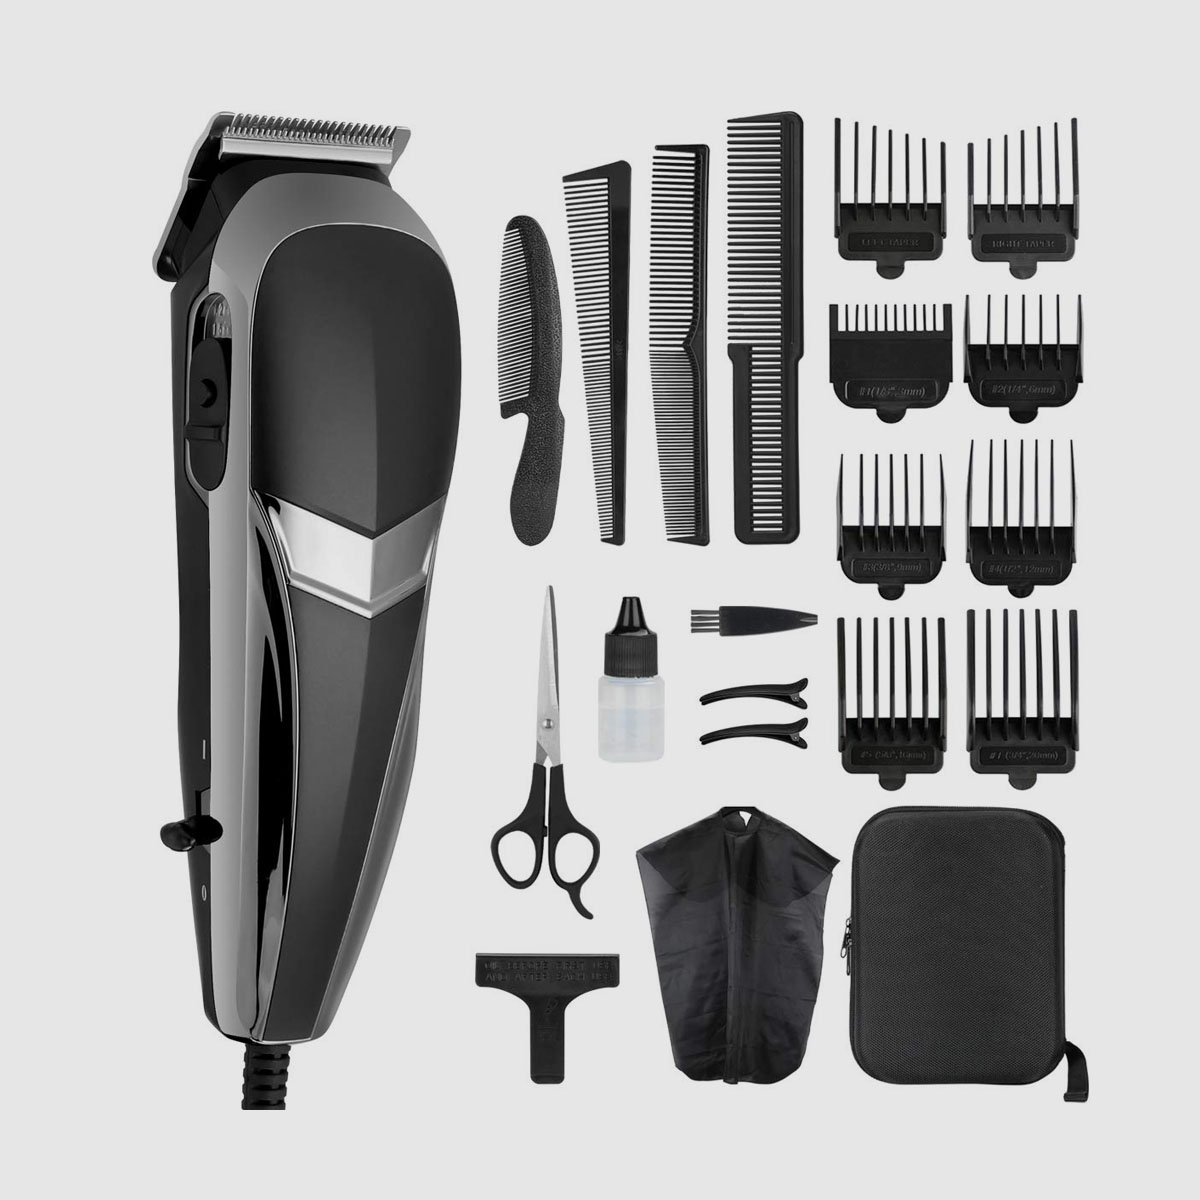 21-piraso Pro Corded Hair Cutting Kit